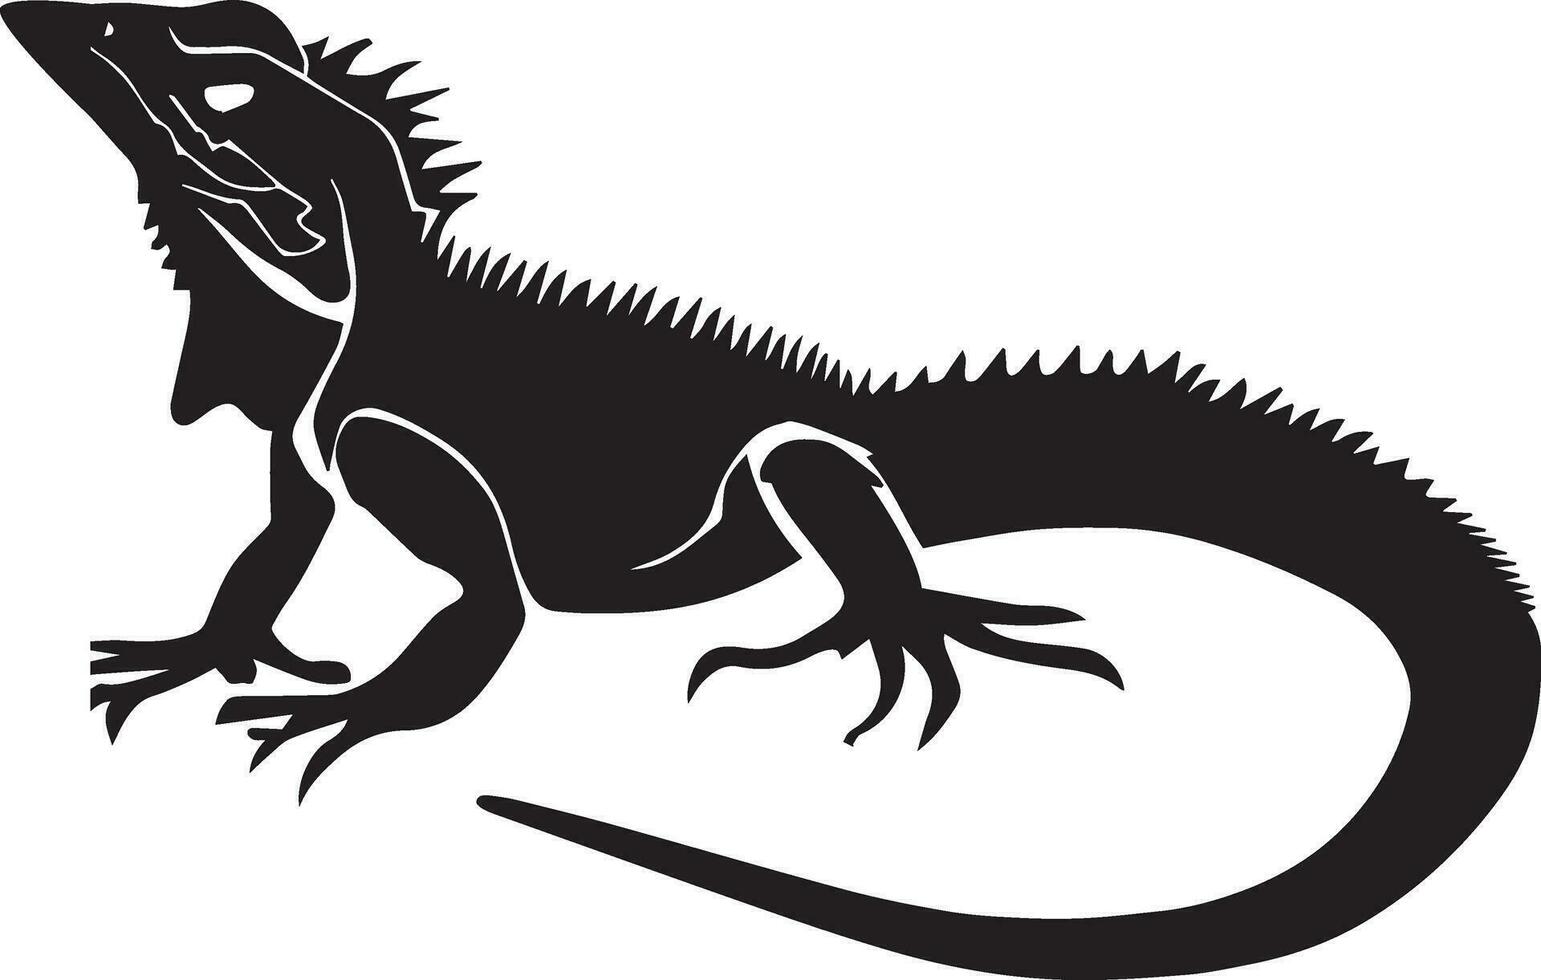 Lizard vector silhouette illustration black color